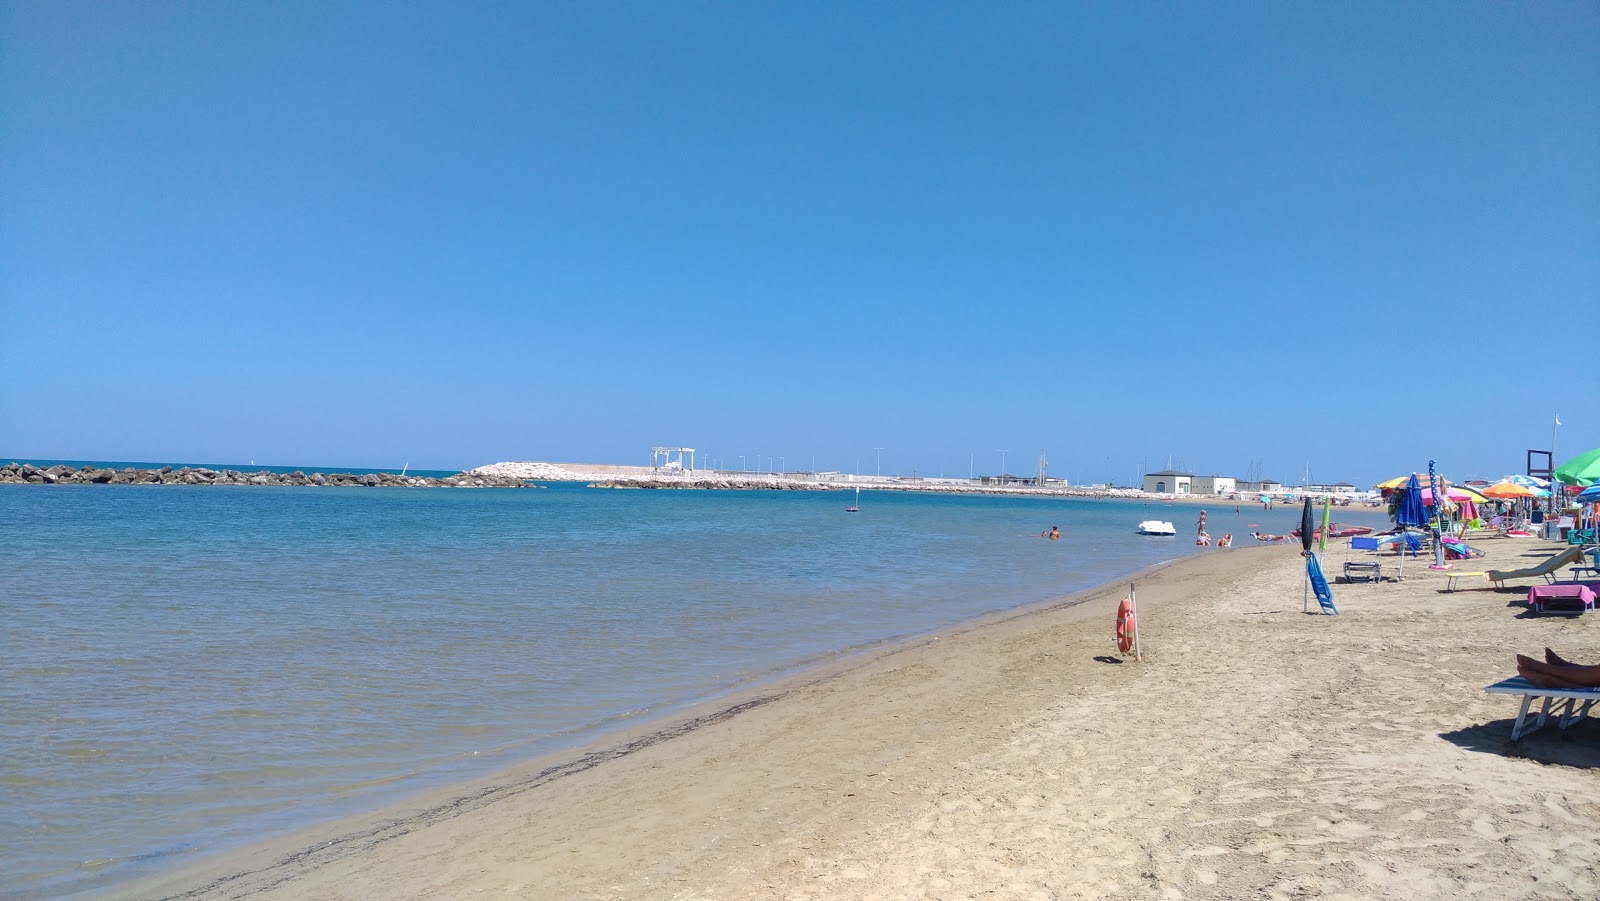 Fotografie cu Marina di Montenero II cu o suprafață de nisip maro fin